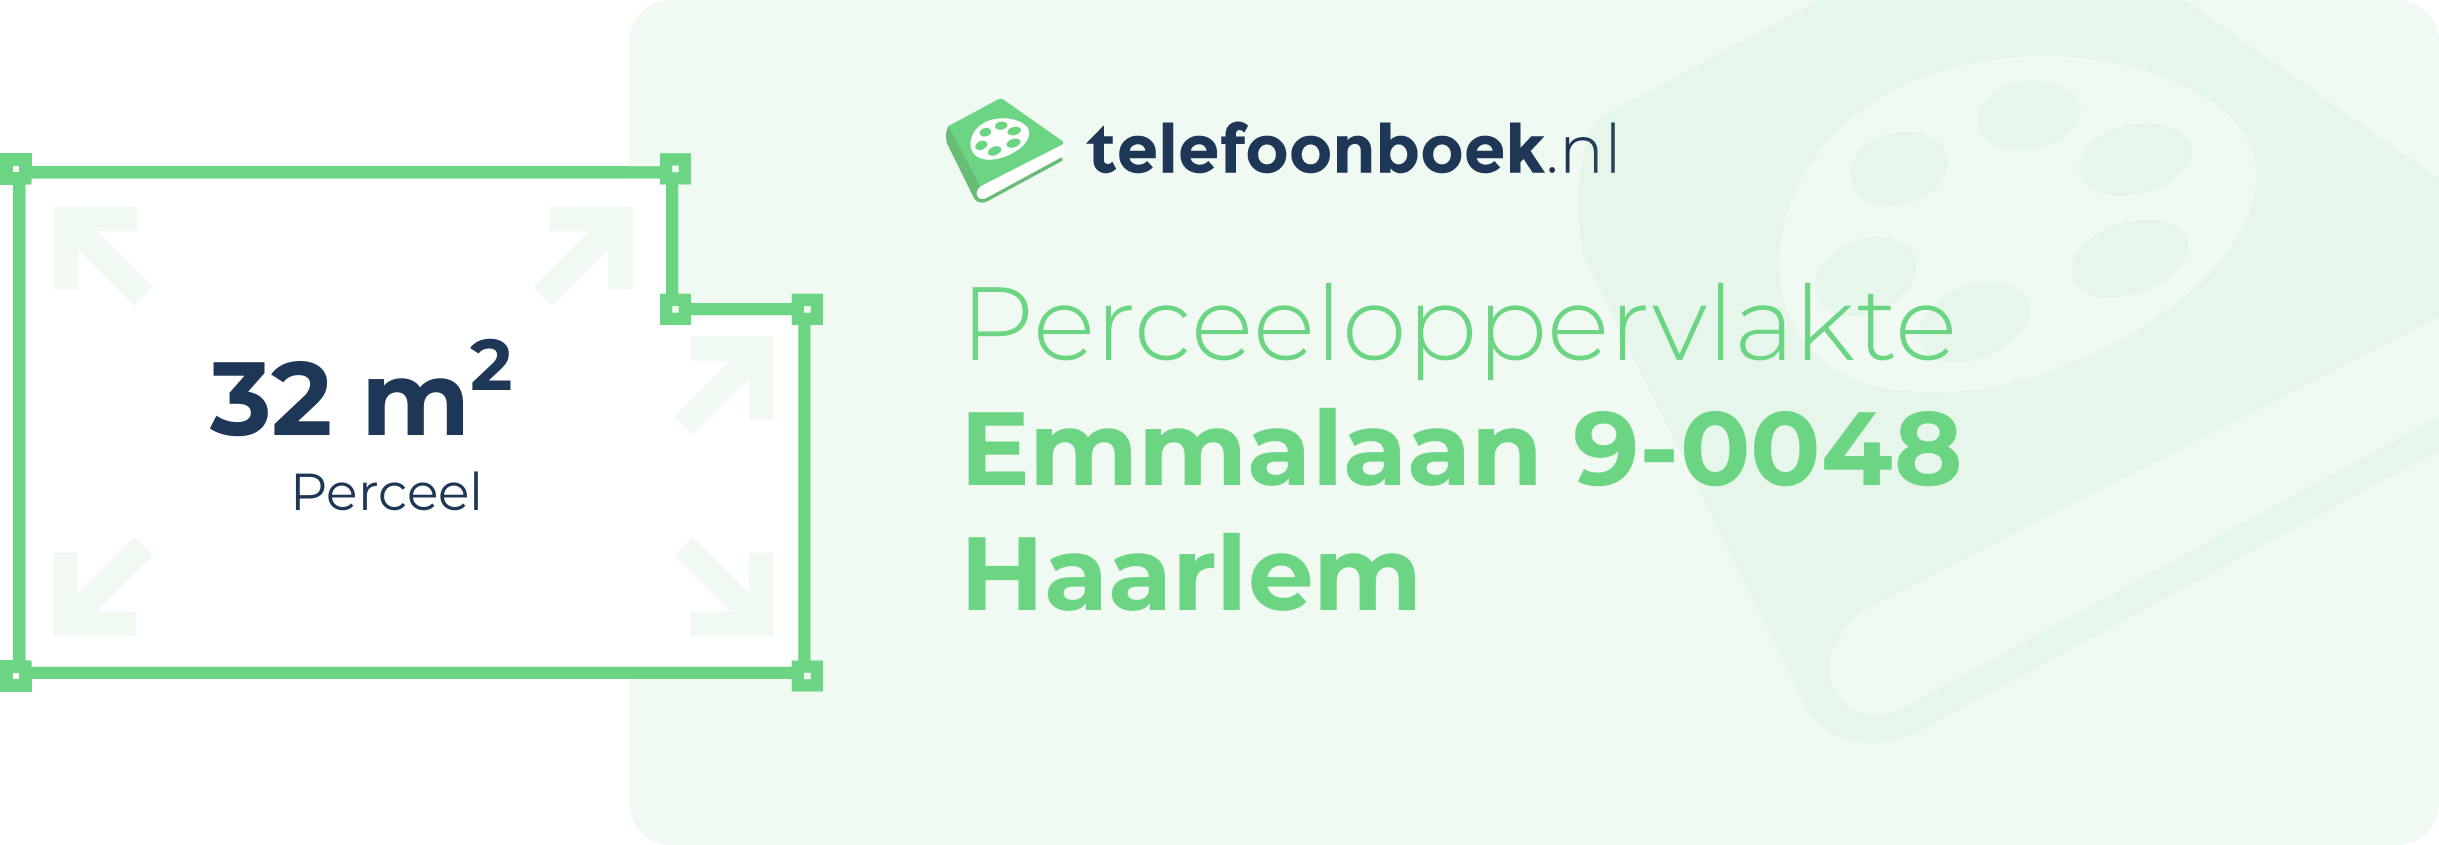 Perceeloppervlakte Emmalaan 9-0048 Haarlem